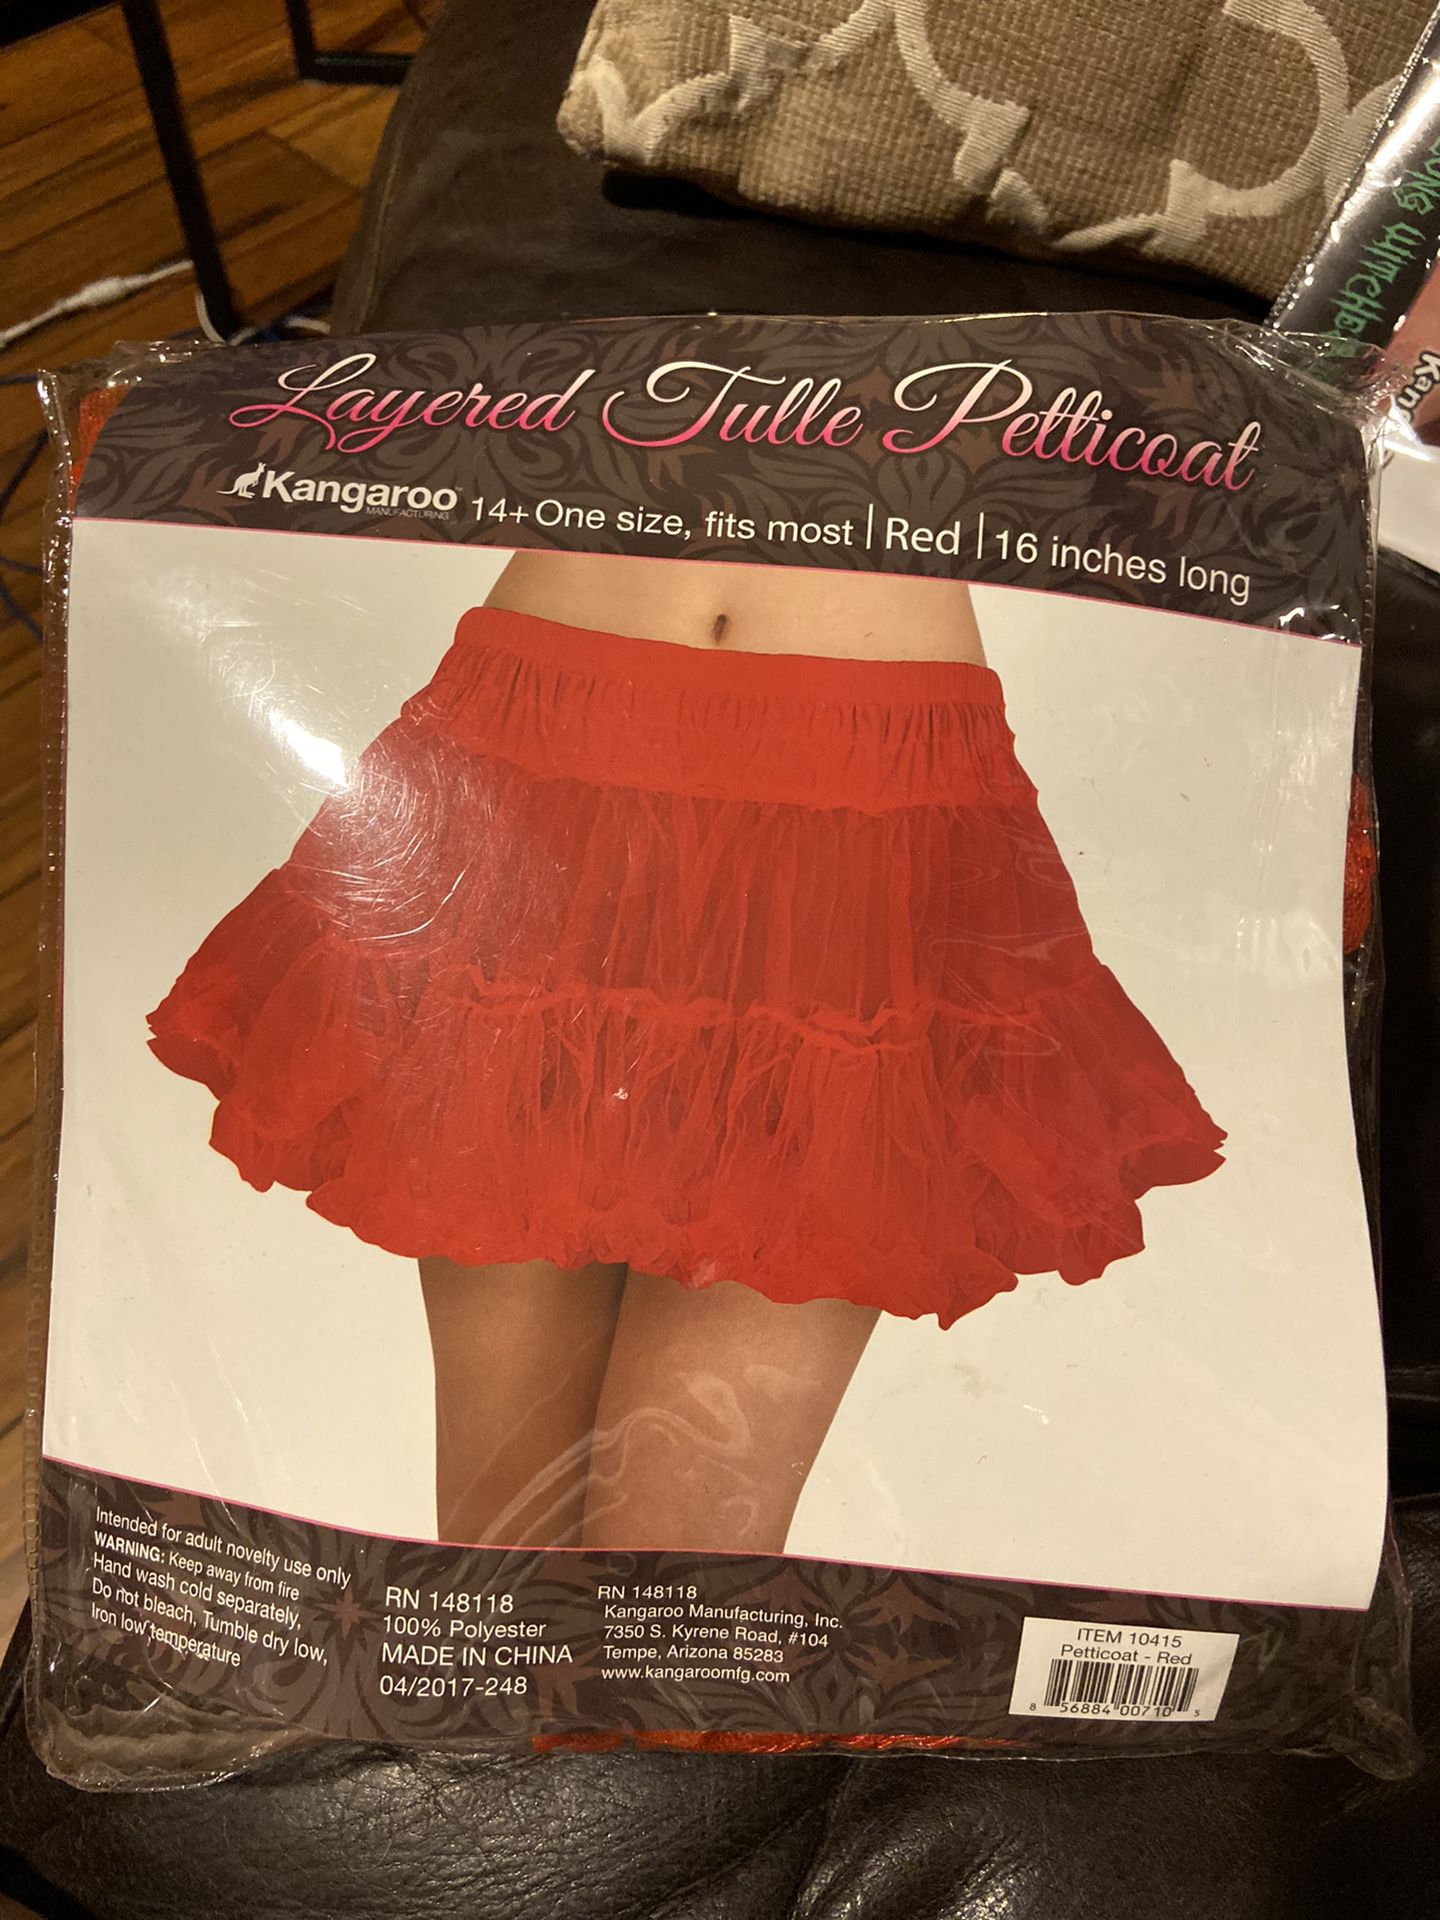 Layered Tulle Petticoat